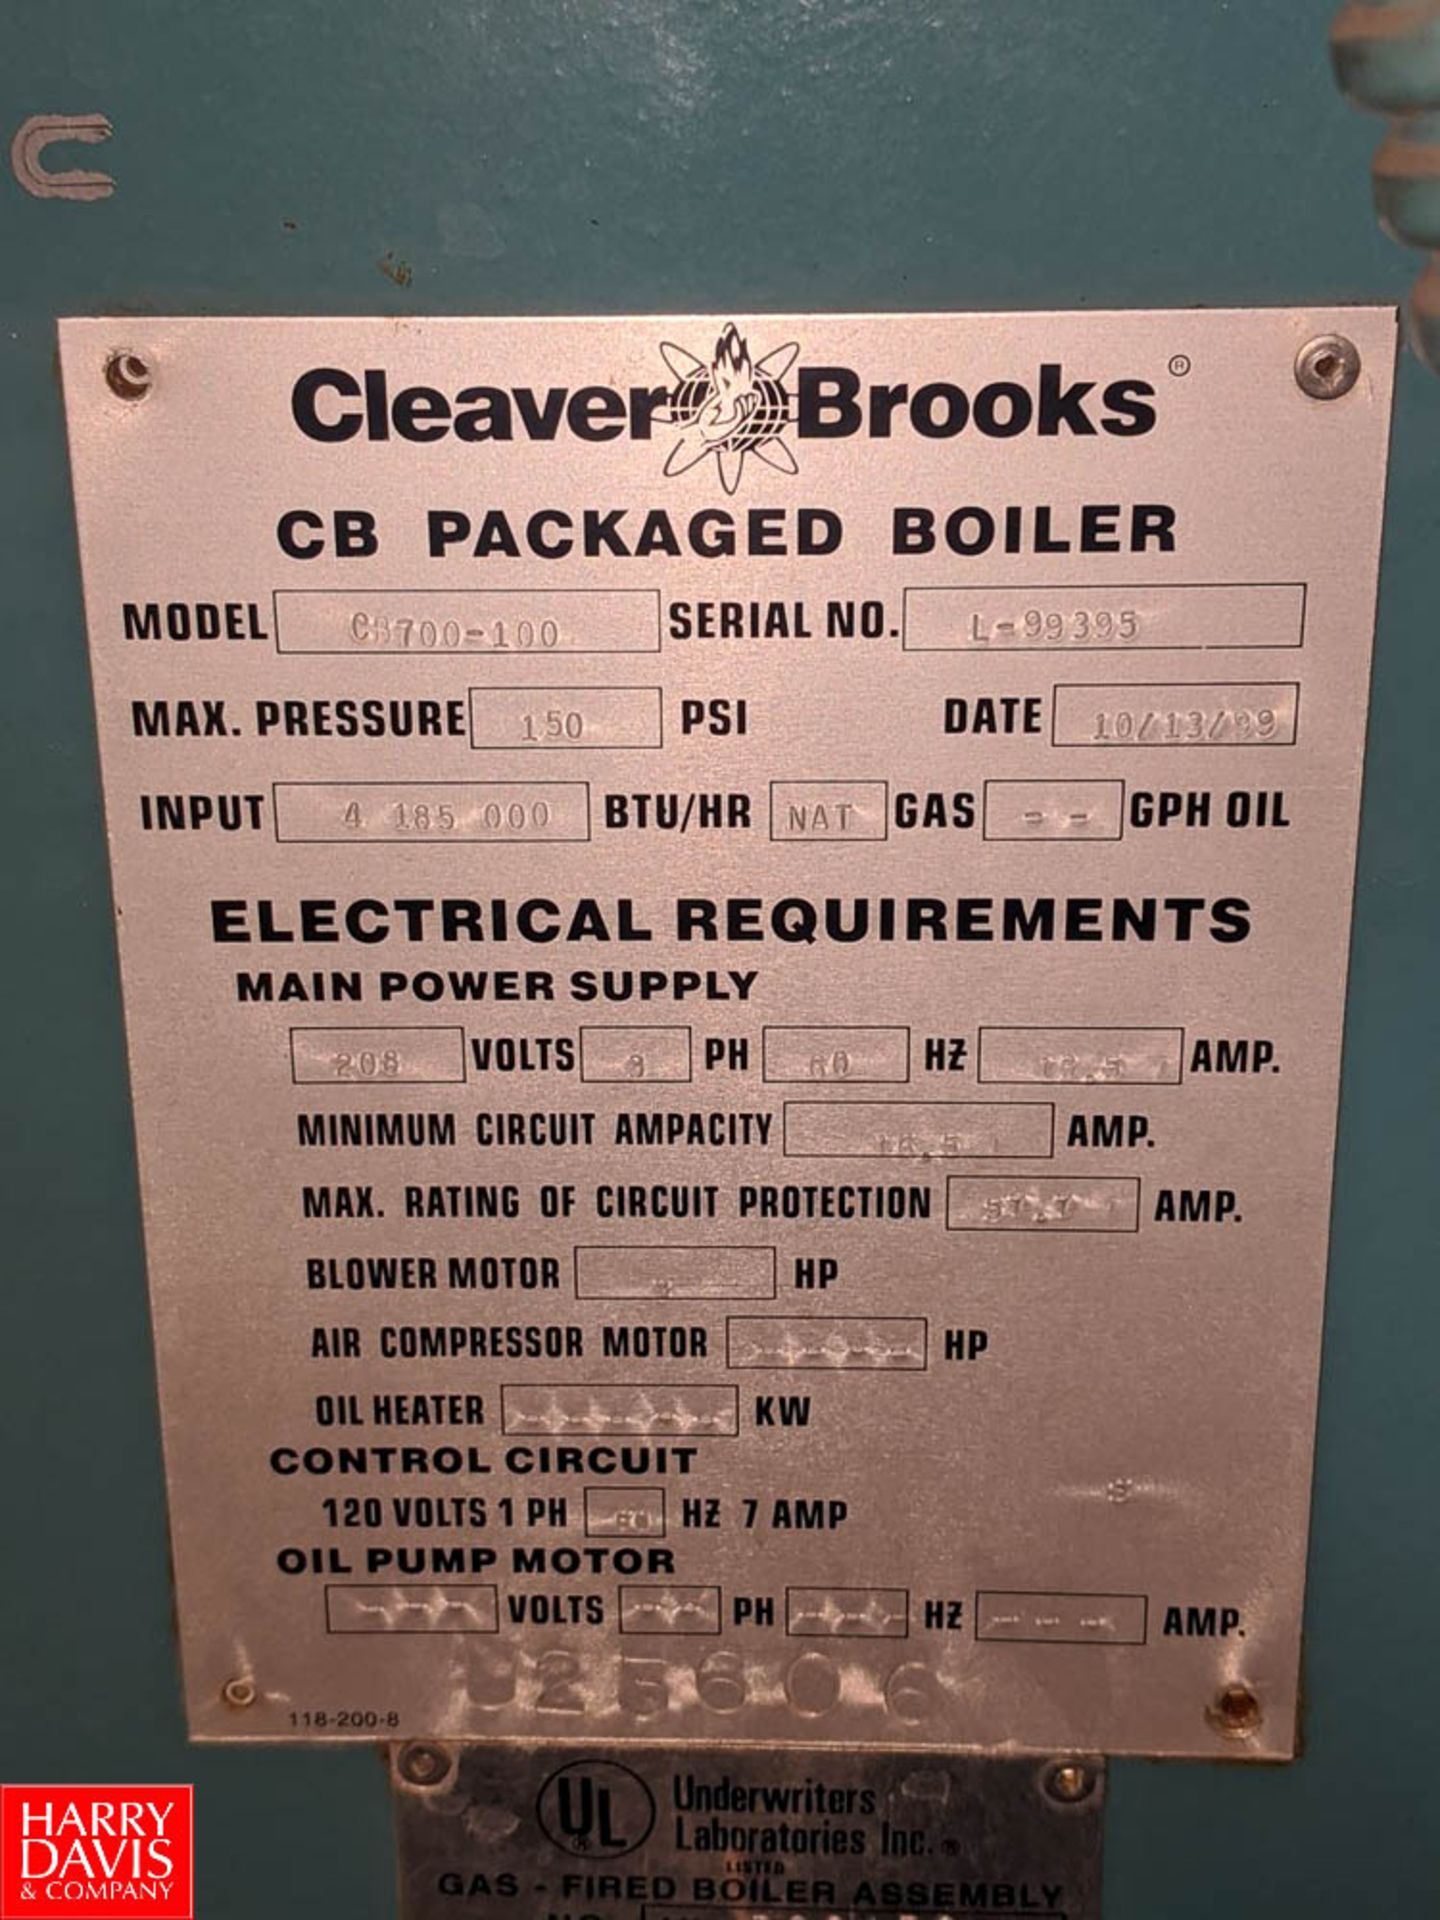 Cleaver Brooks 100 HP Natural Gas Boiler Model CB700-100 : SN L-99395 Rigging Fee: $2950 - Image 4 of 4